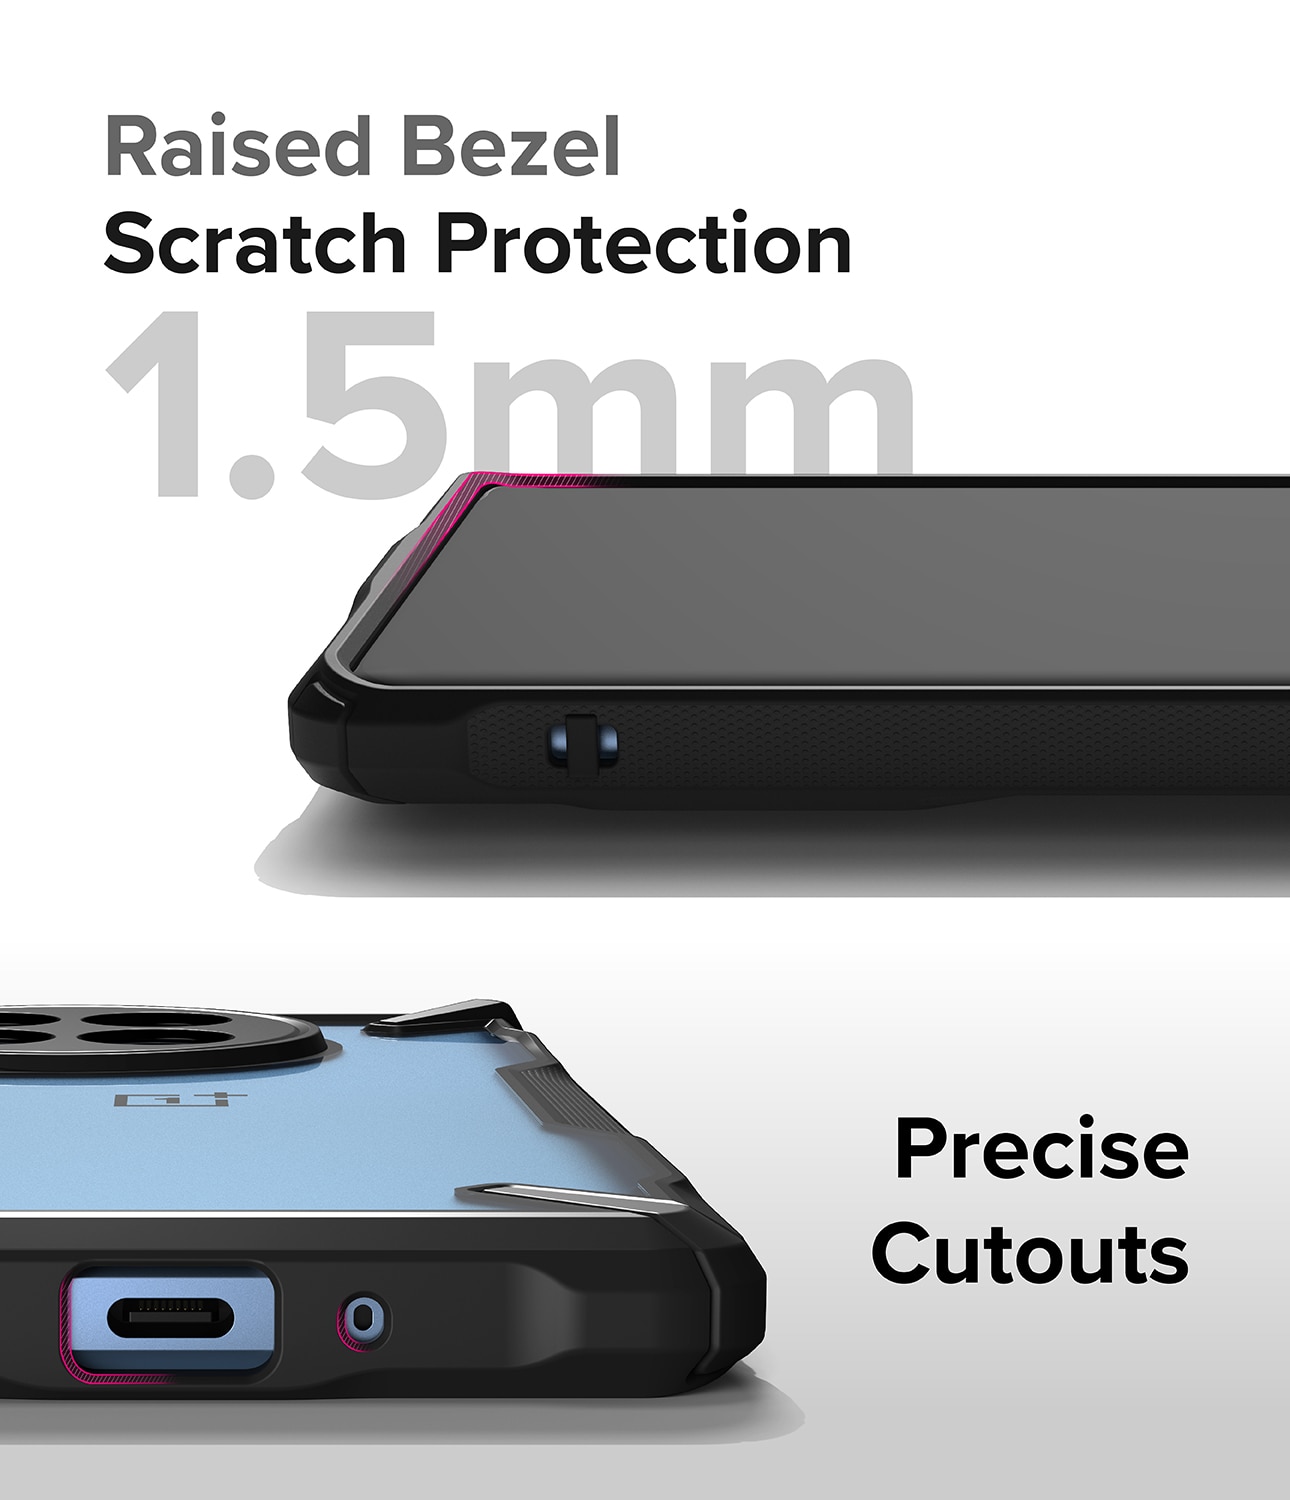 Coque Fusion X OnePlus 12R, noir